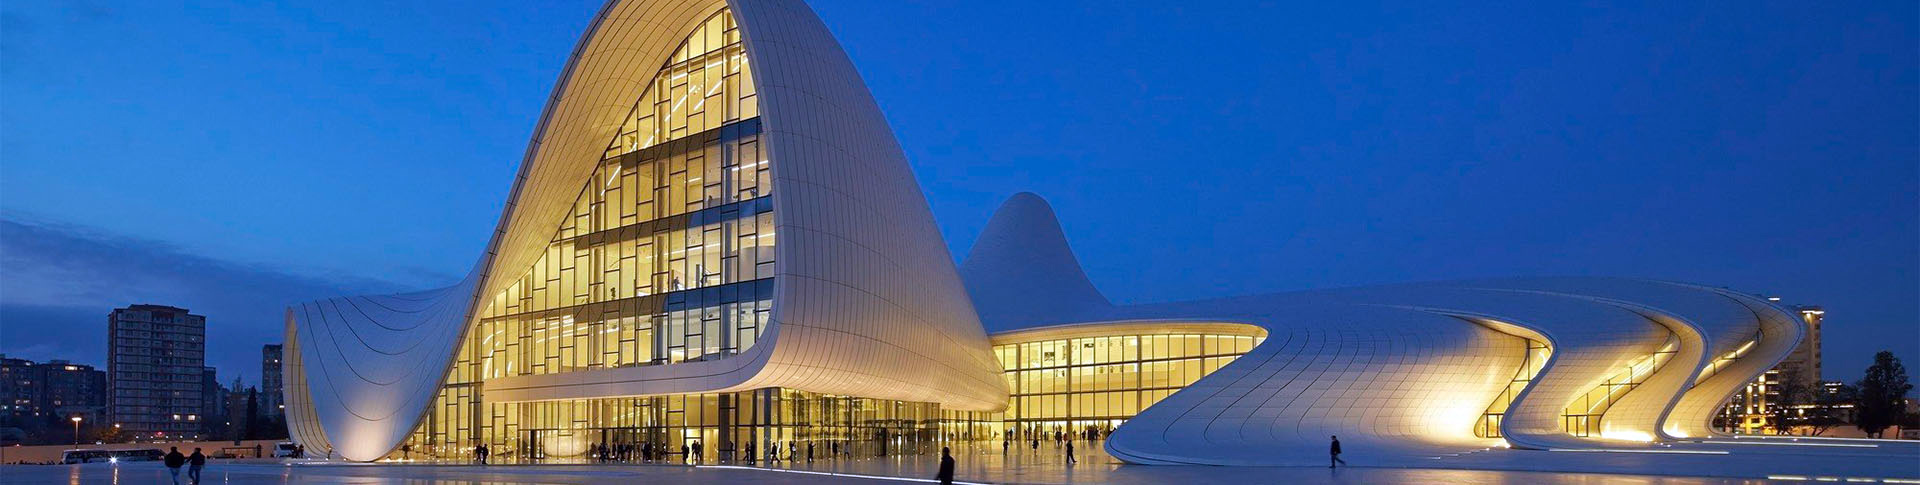 Baku Heydar Aliyev Center that was designed by Zaha Hadid.